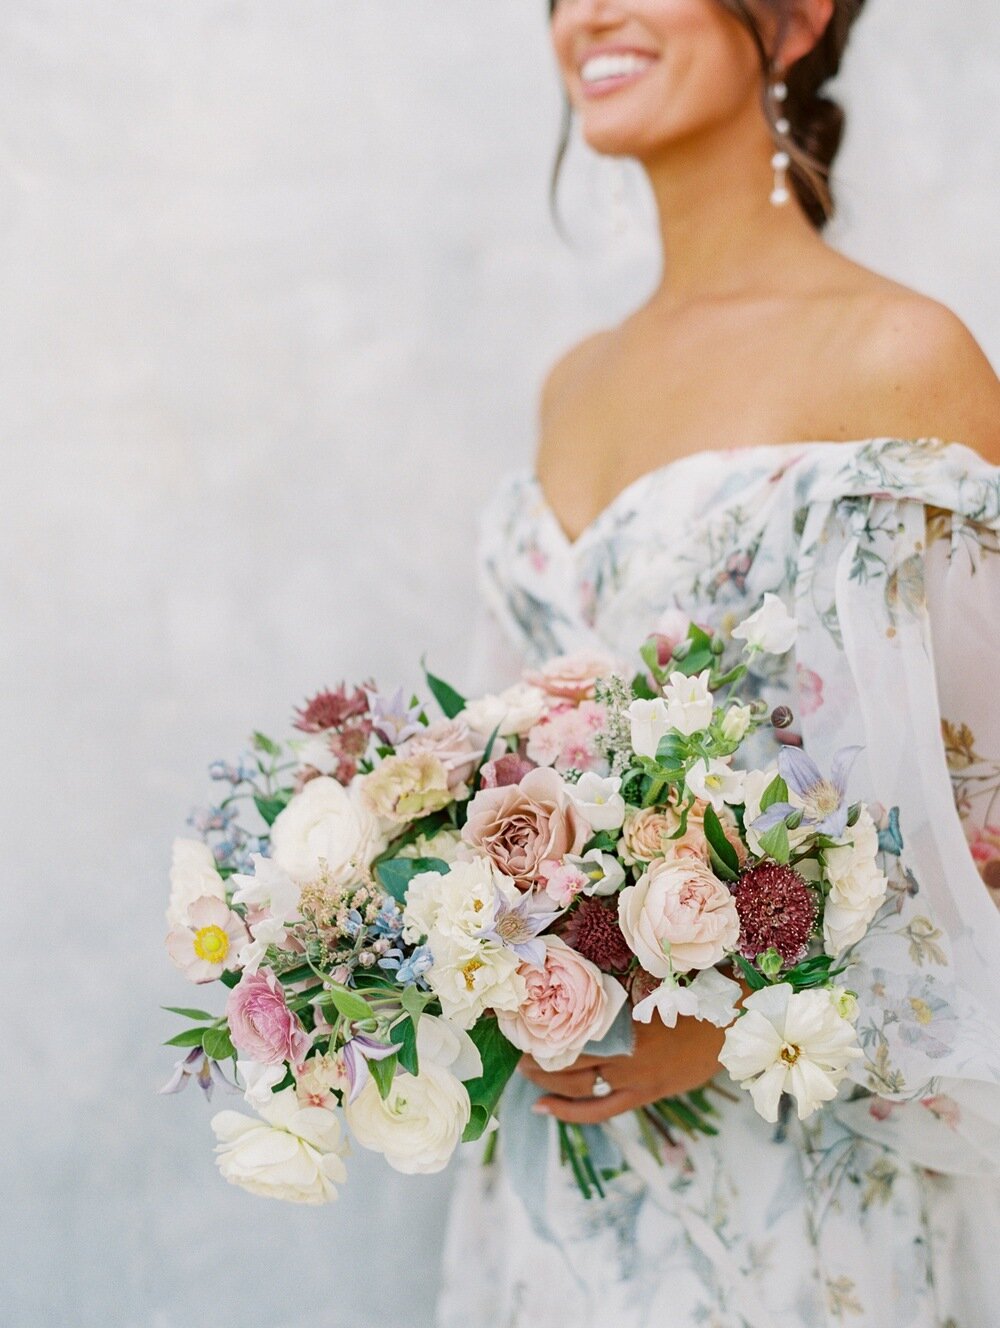 Bride-in-Monique-Lhuillier-floral-Jardin-gown-at-her-Sunstone-Villa-Wedding-with-a-pastel-garden-style-bridal-bouquet.jpg